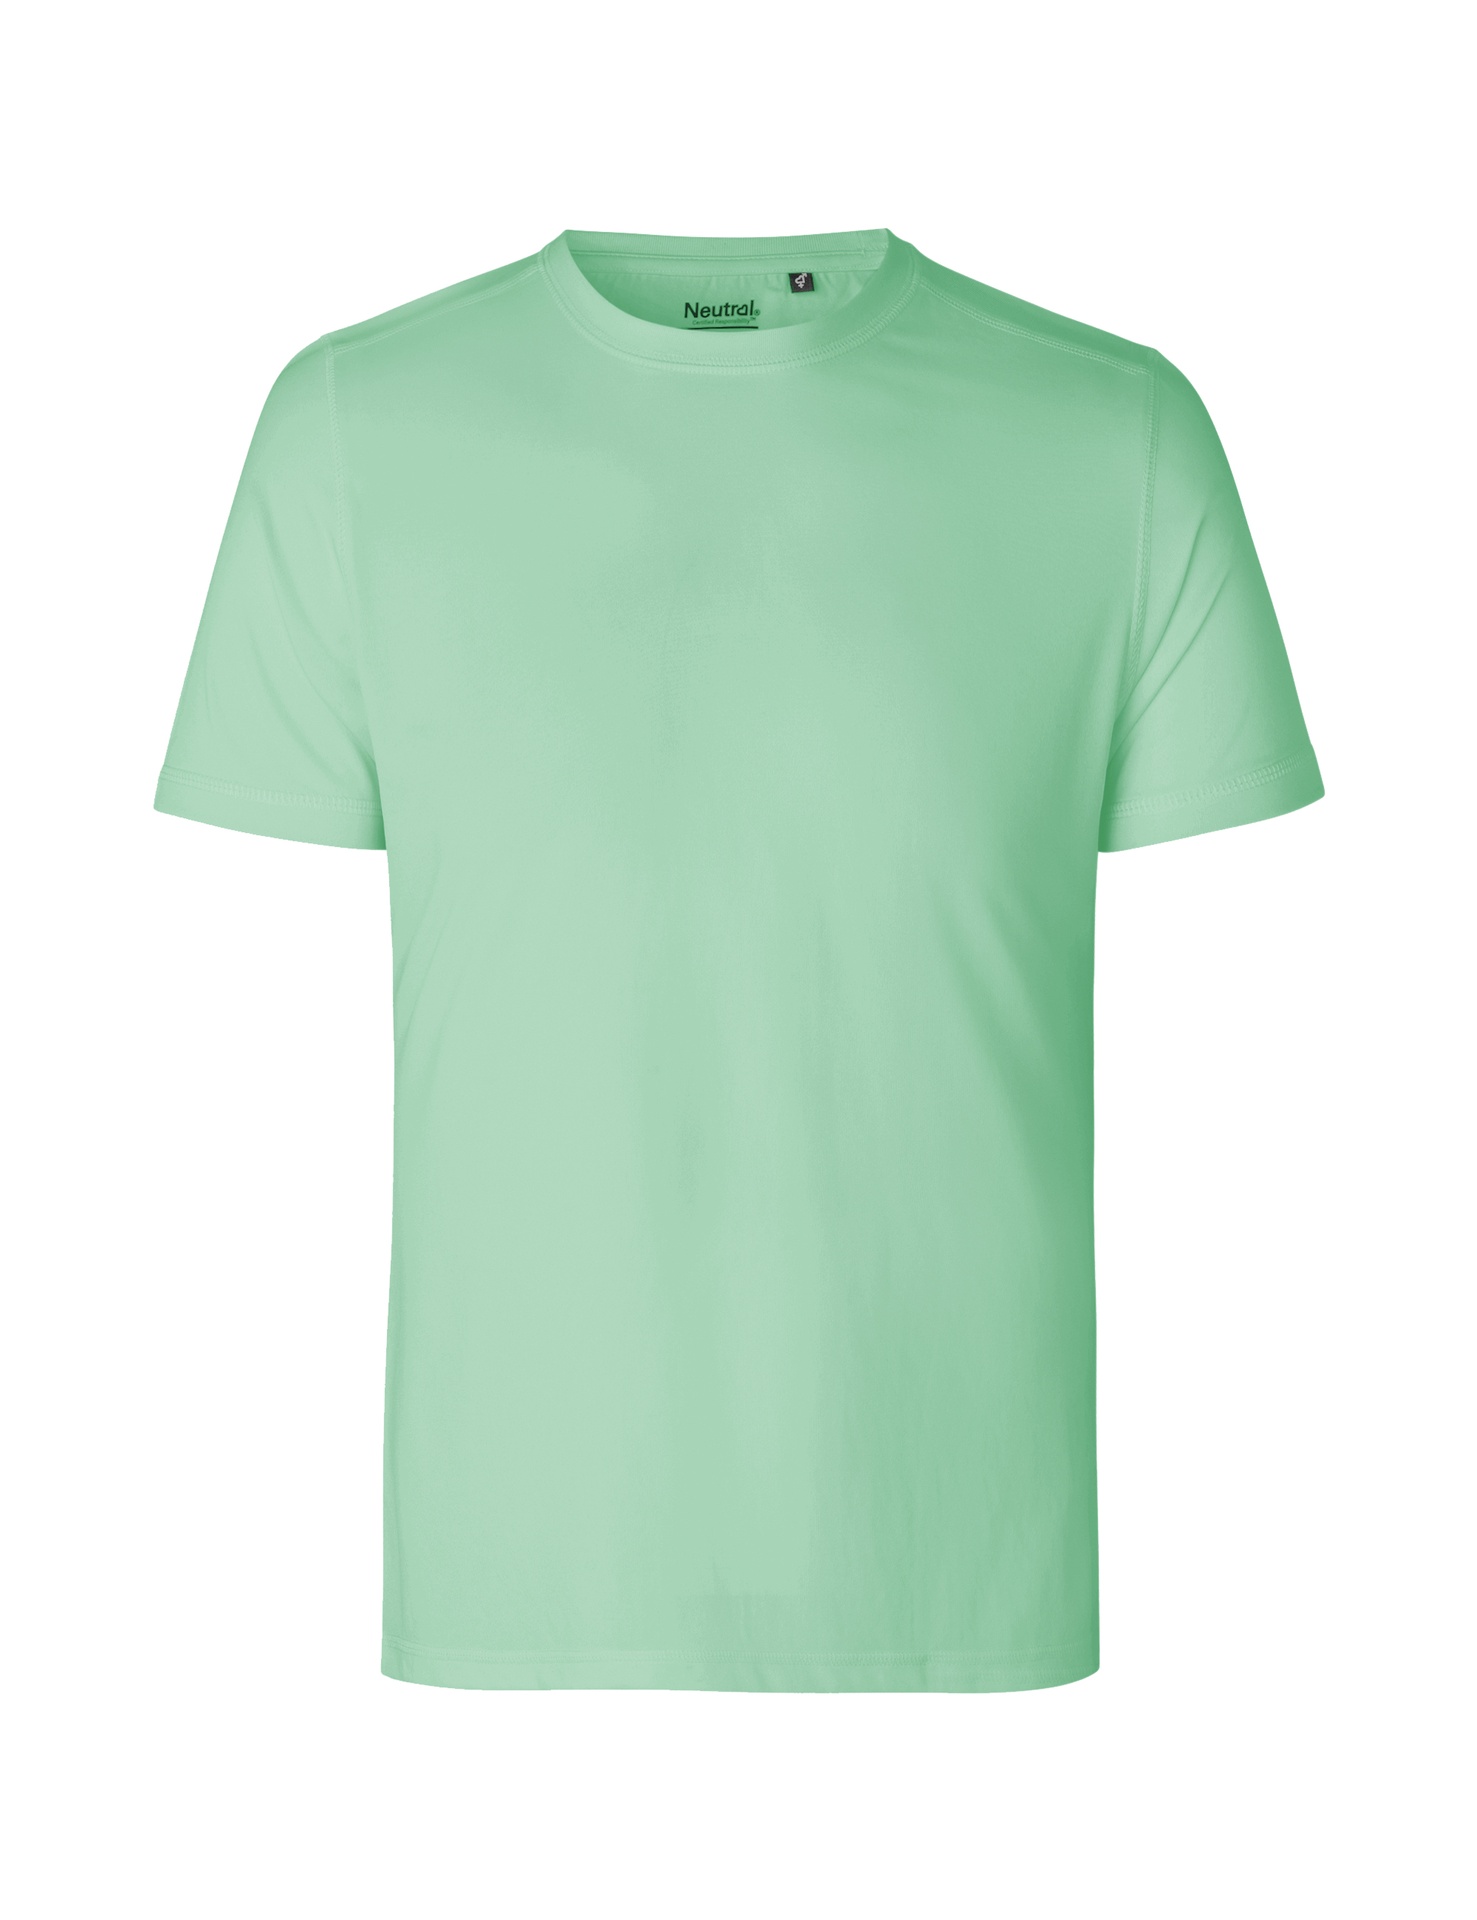 [PR/03797] Recycled Performance T-Shirt (Dusty Mint 40, M)